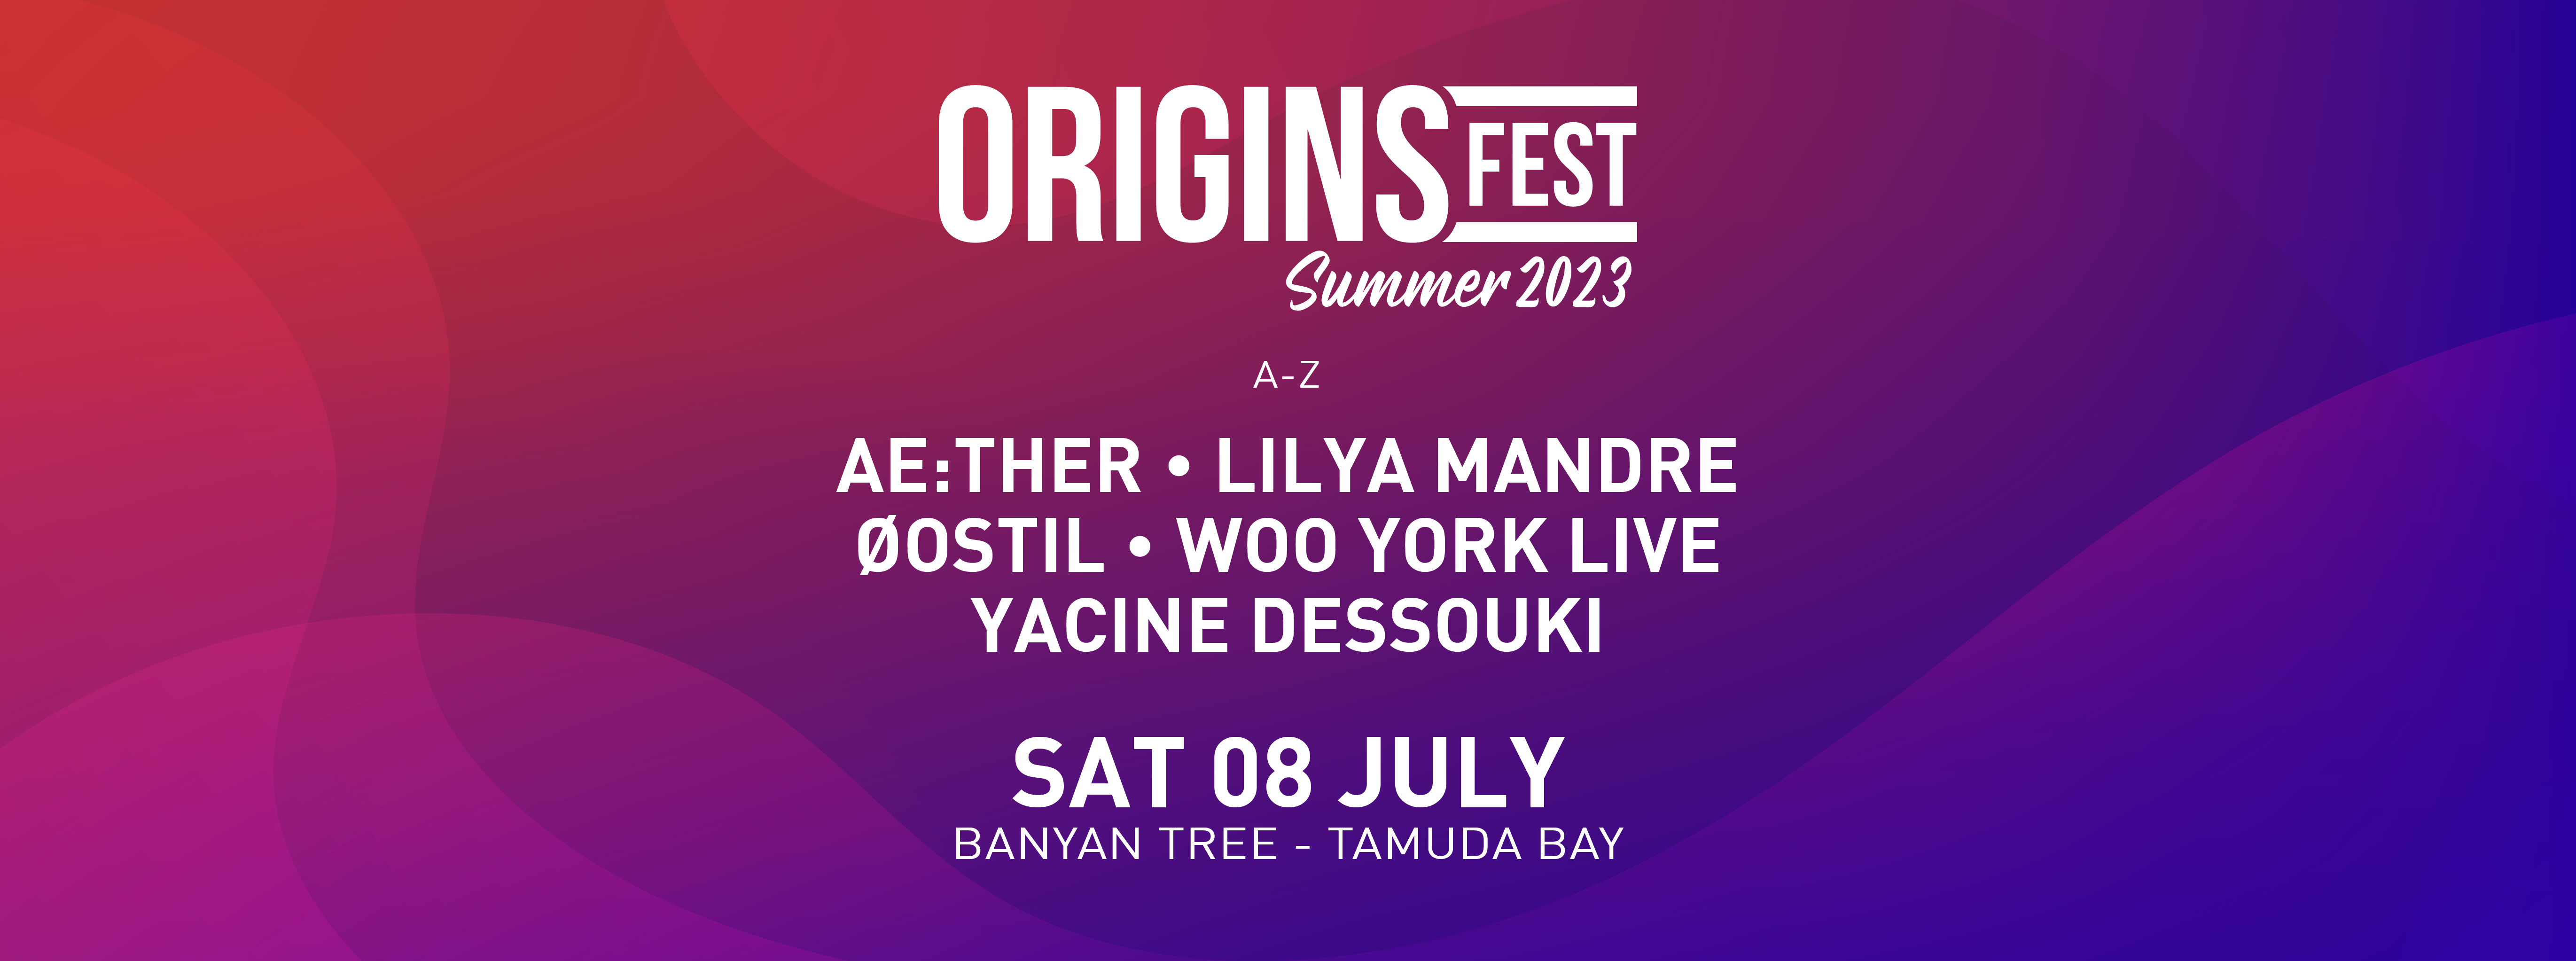 Origins Summer - フライヤー表